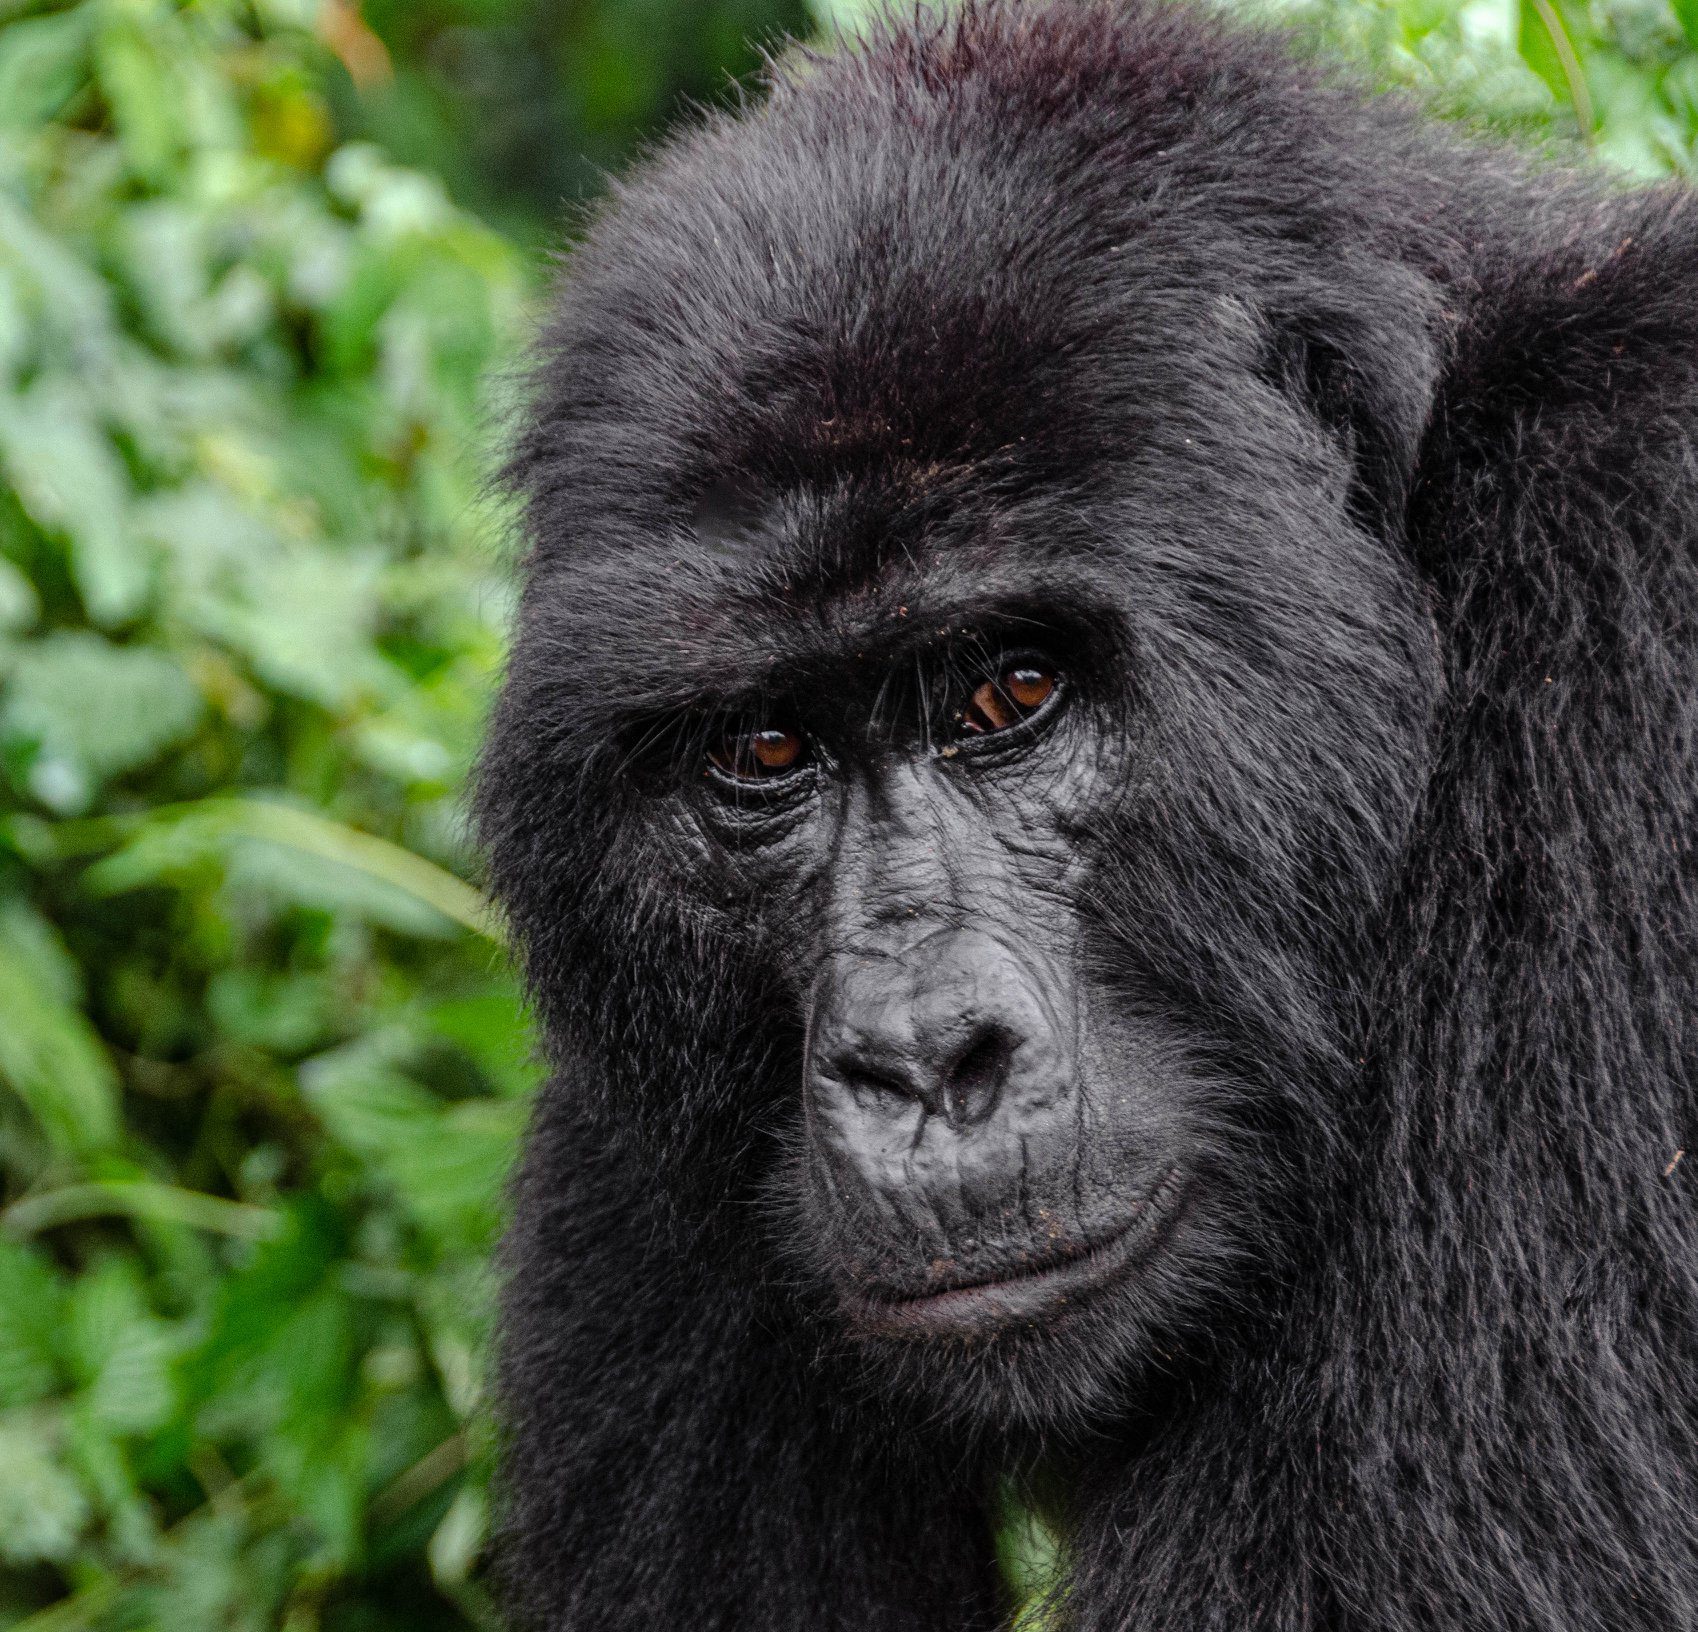 Triple Gorilla Tour Rwanda in Uganda and Dr Congo